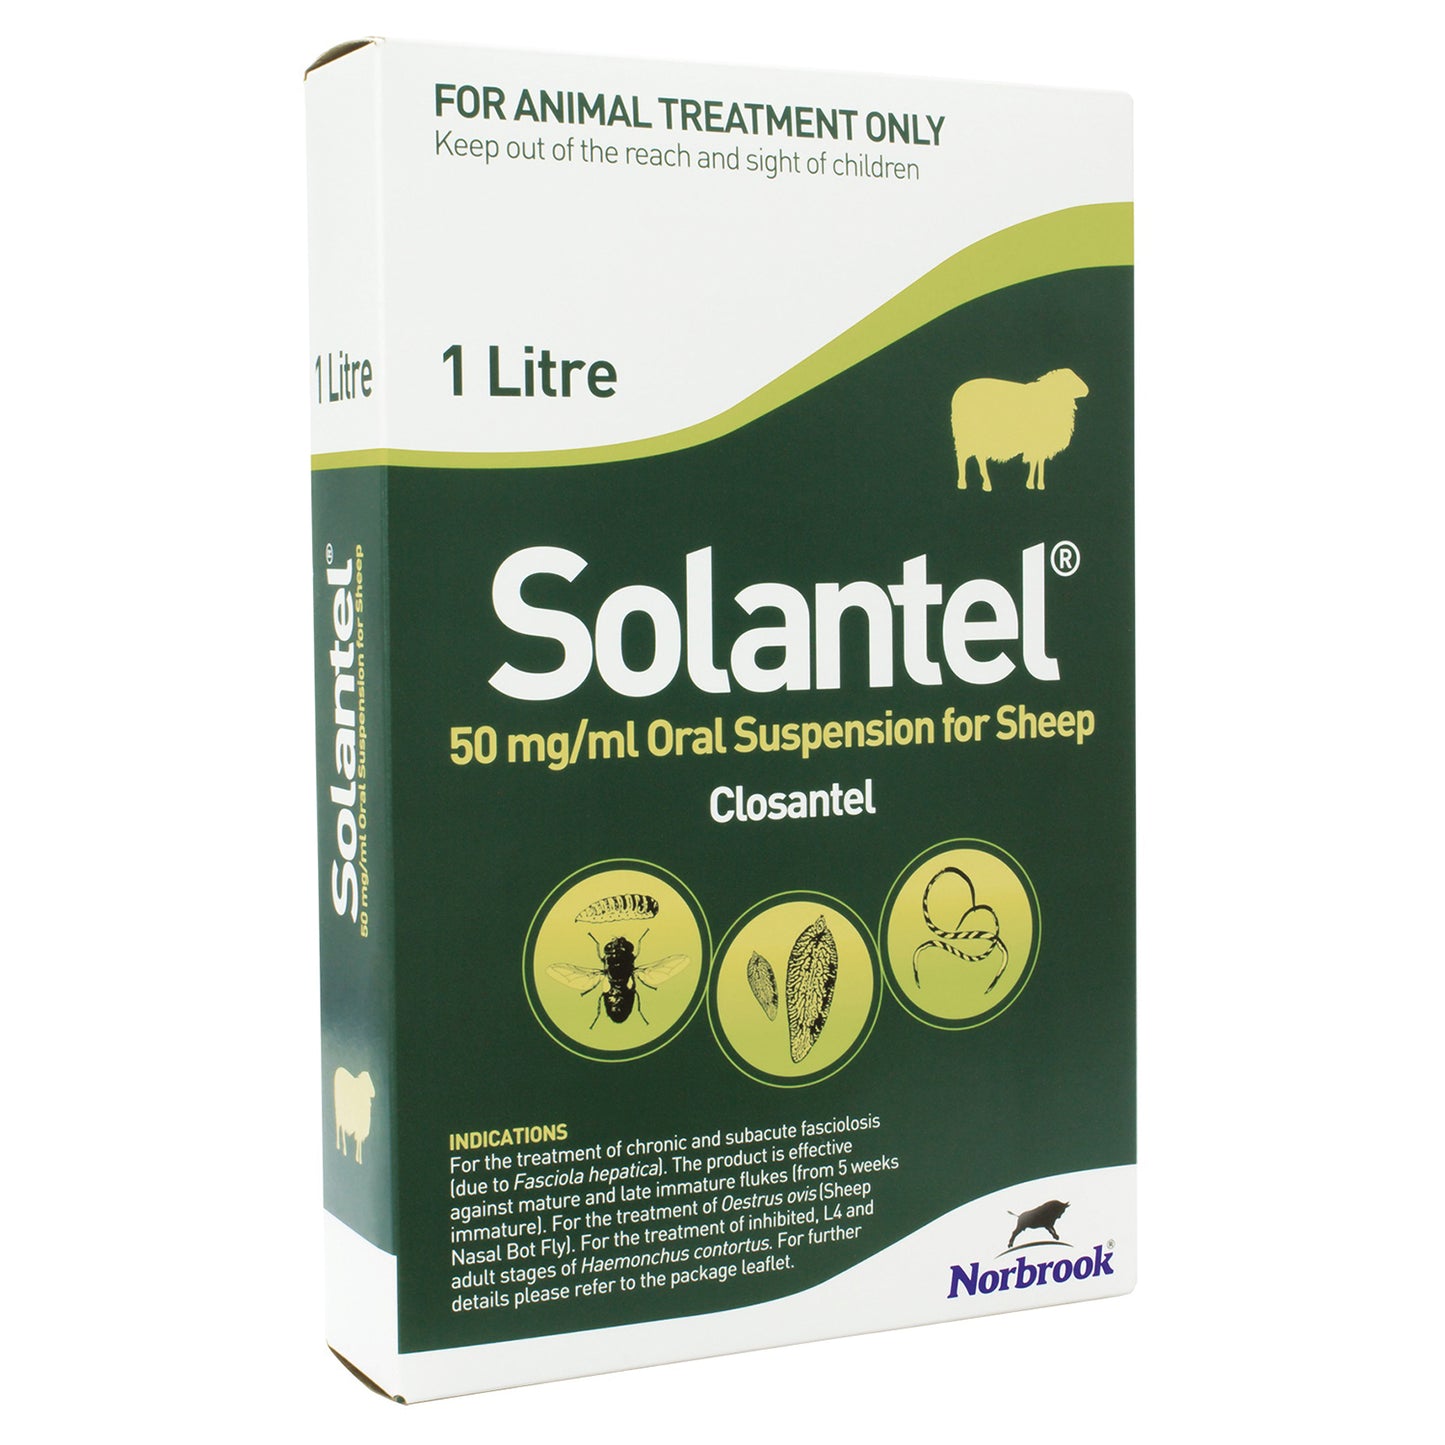 Solantel 50 mg/ml Oral Suspension for Sheep